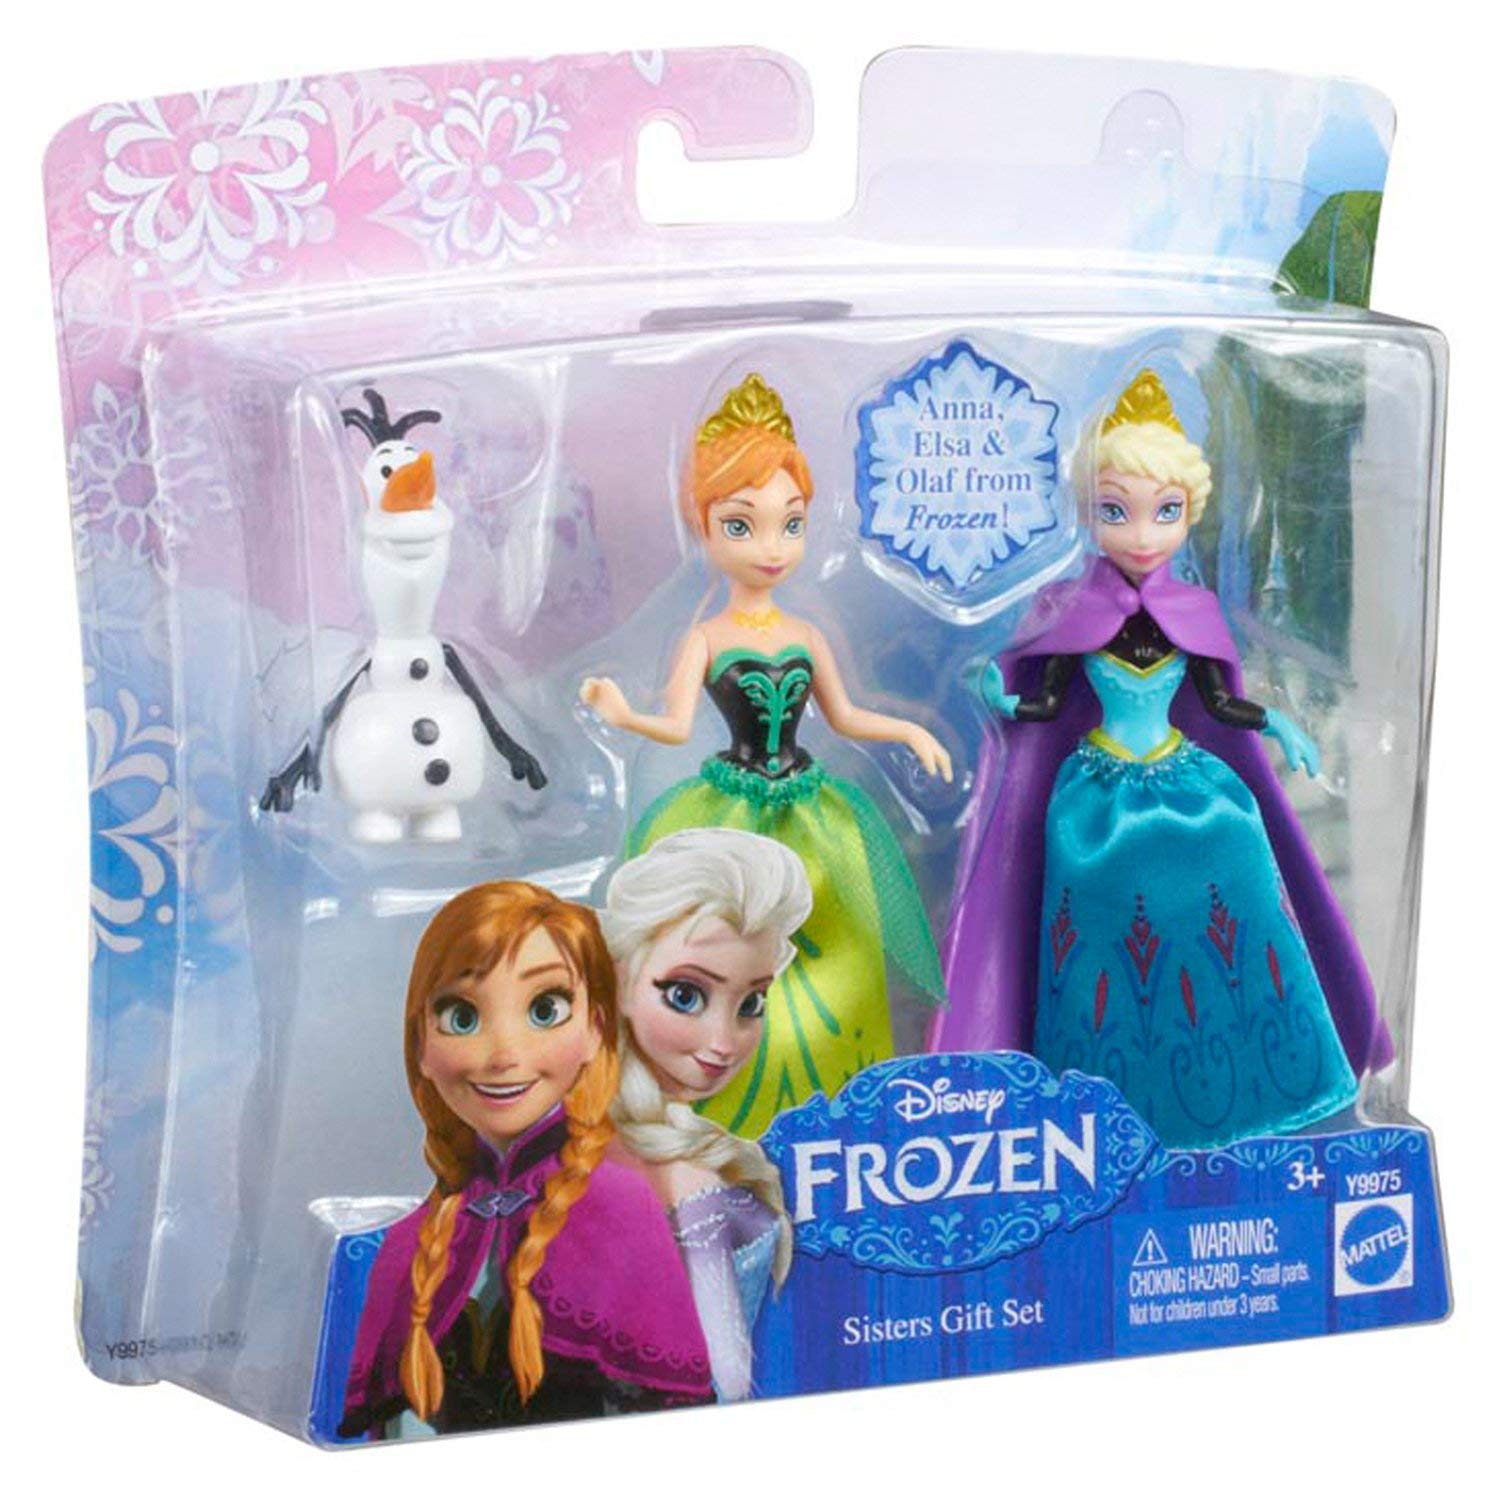 Amazon.com: Mattel Disney Frozen Sisters Giftset: Toys & Games